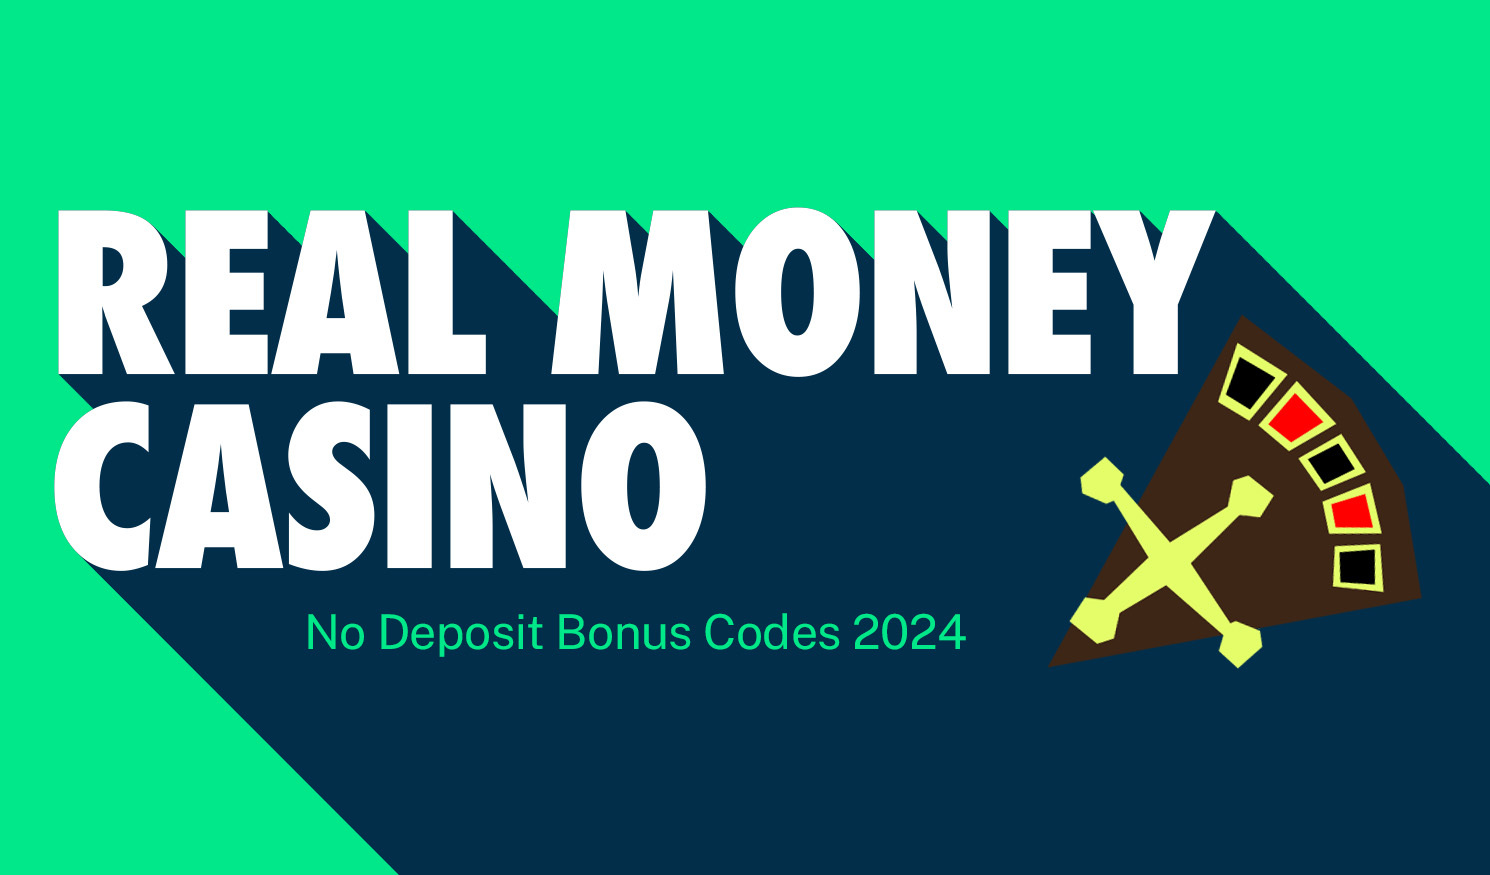 Real Money Casino No Deposit Bonus Codes 2024